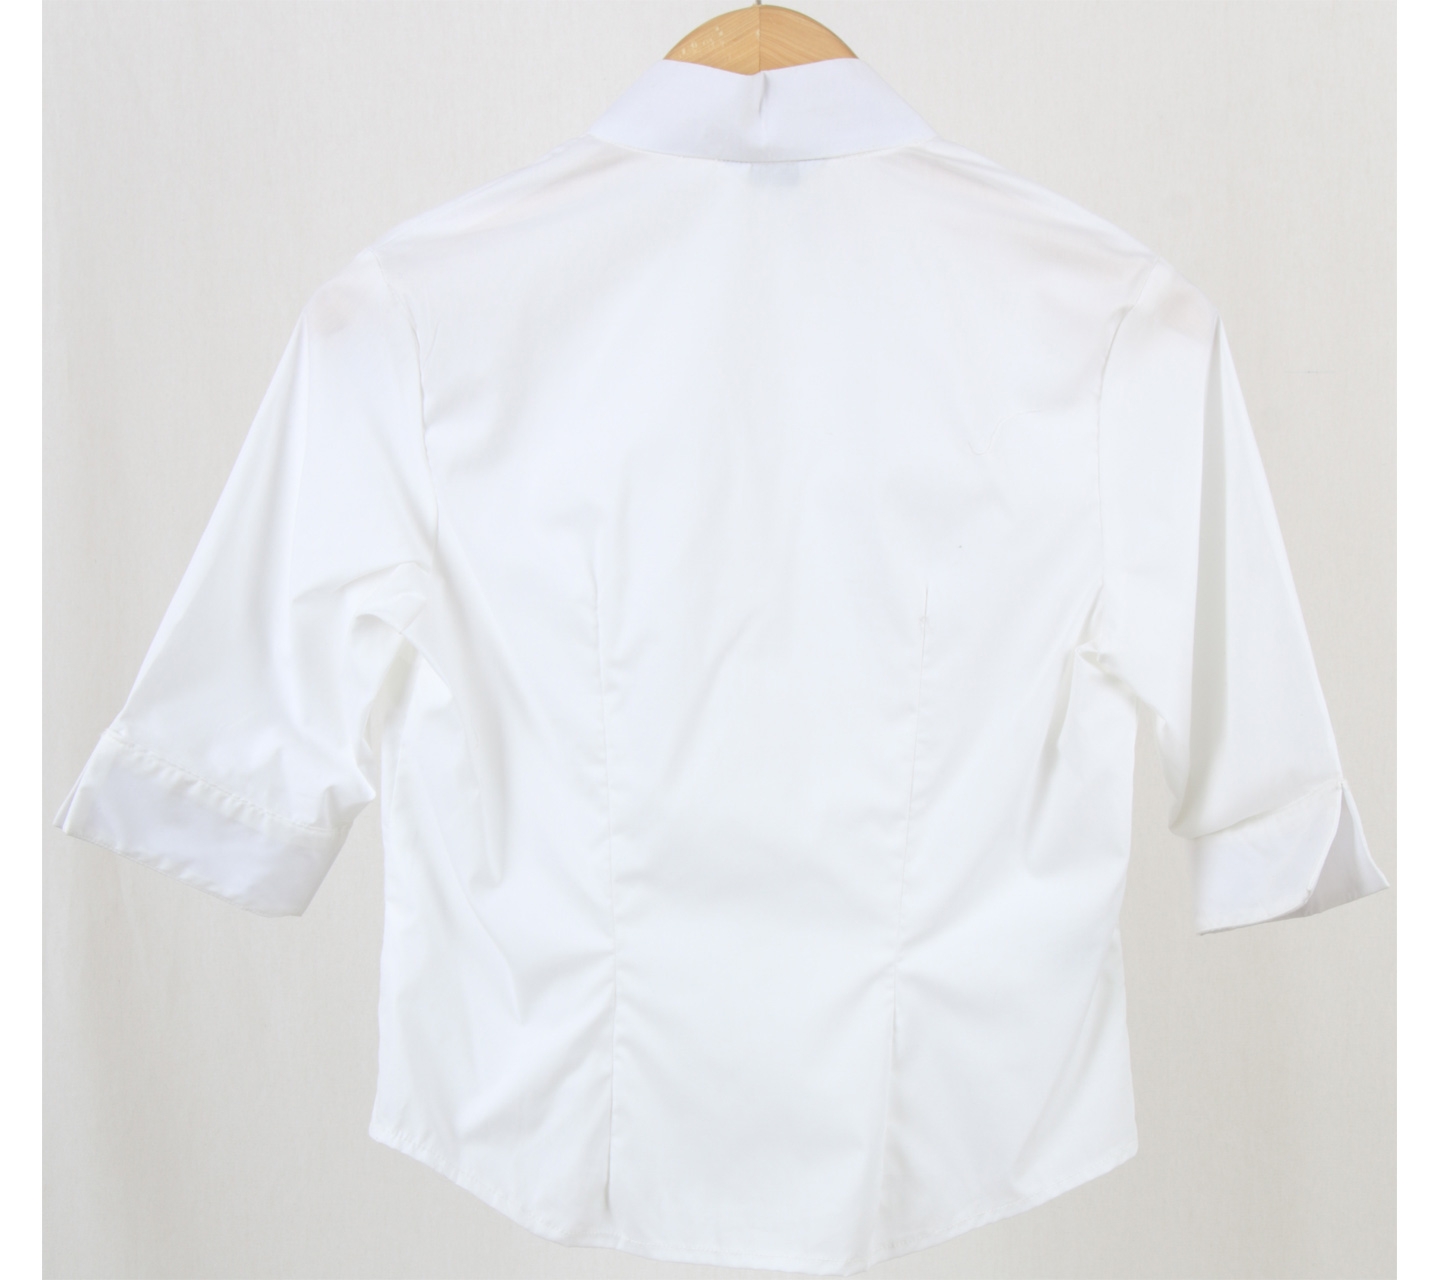 Alto White Shirt